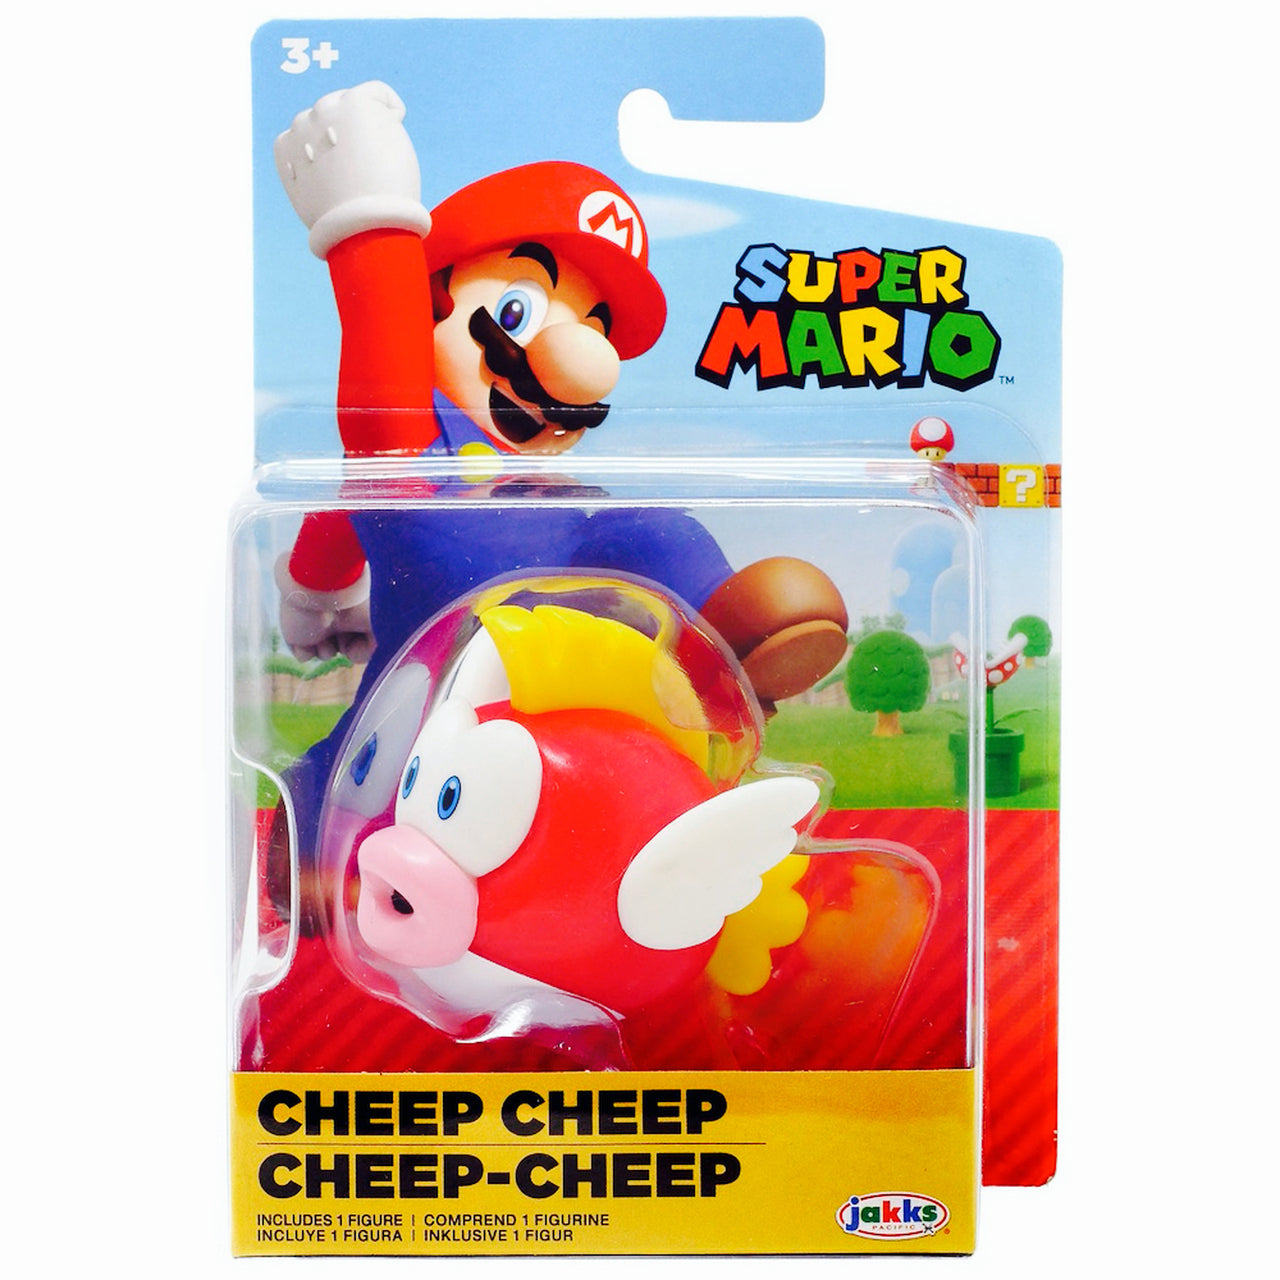 Cheep Cheep - Super Mario Brothers World of Nintendo 2.5" Collectible Figure